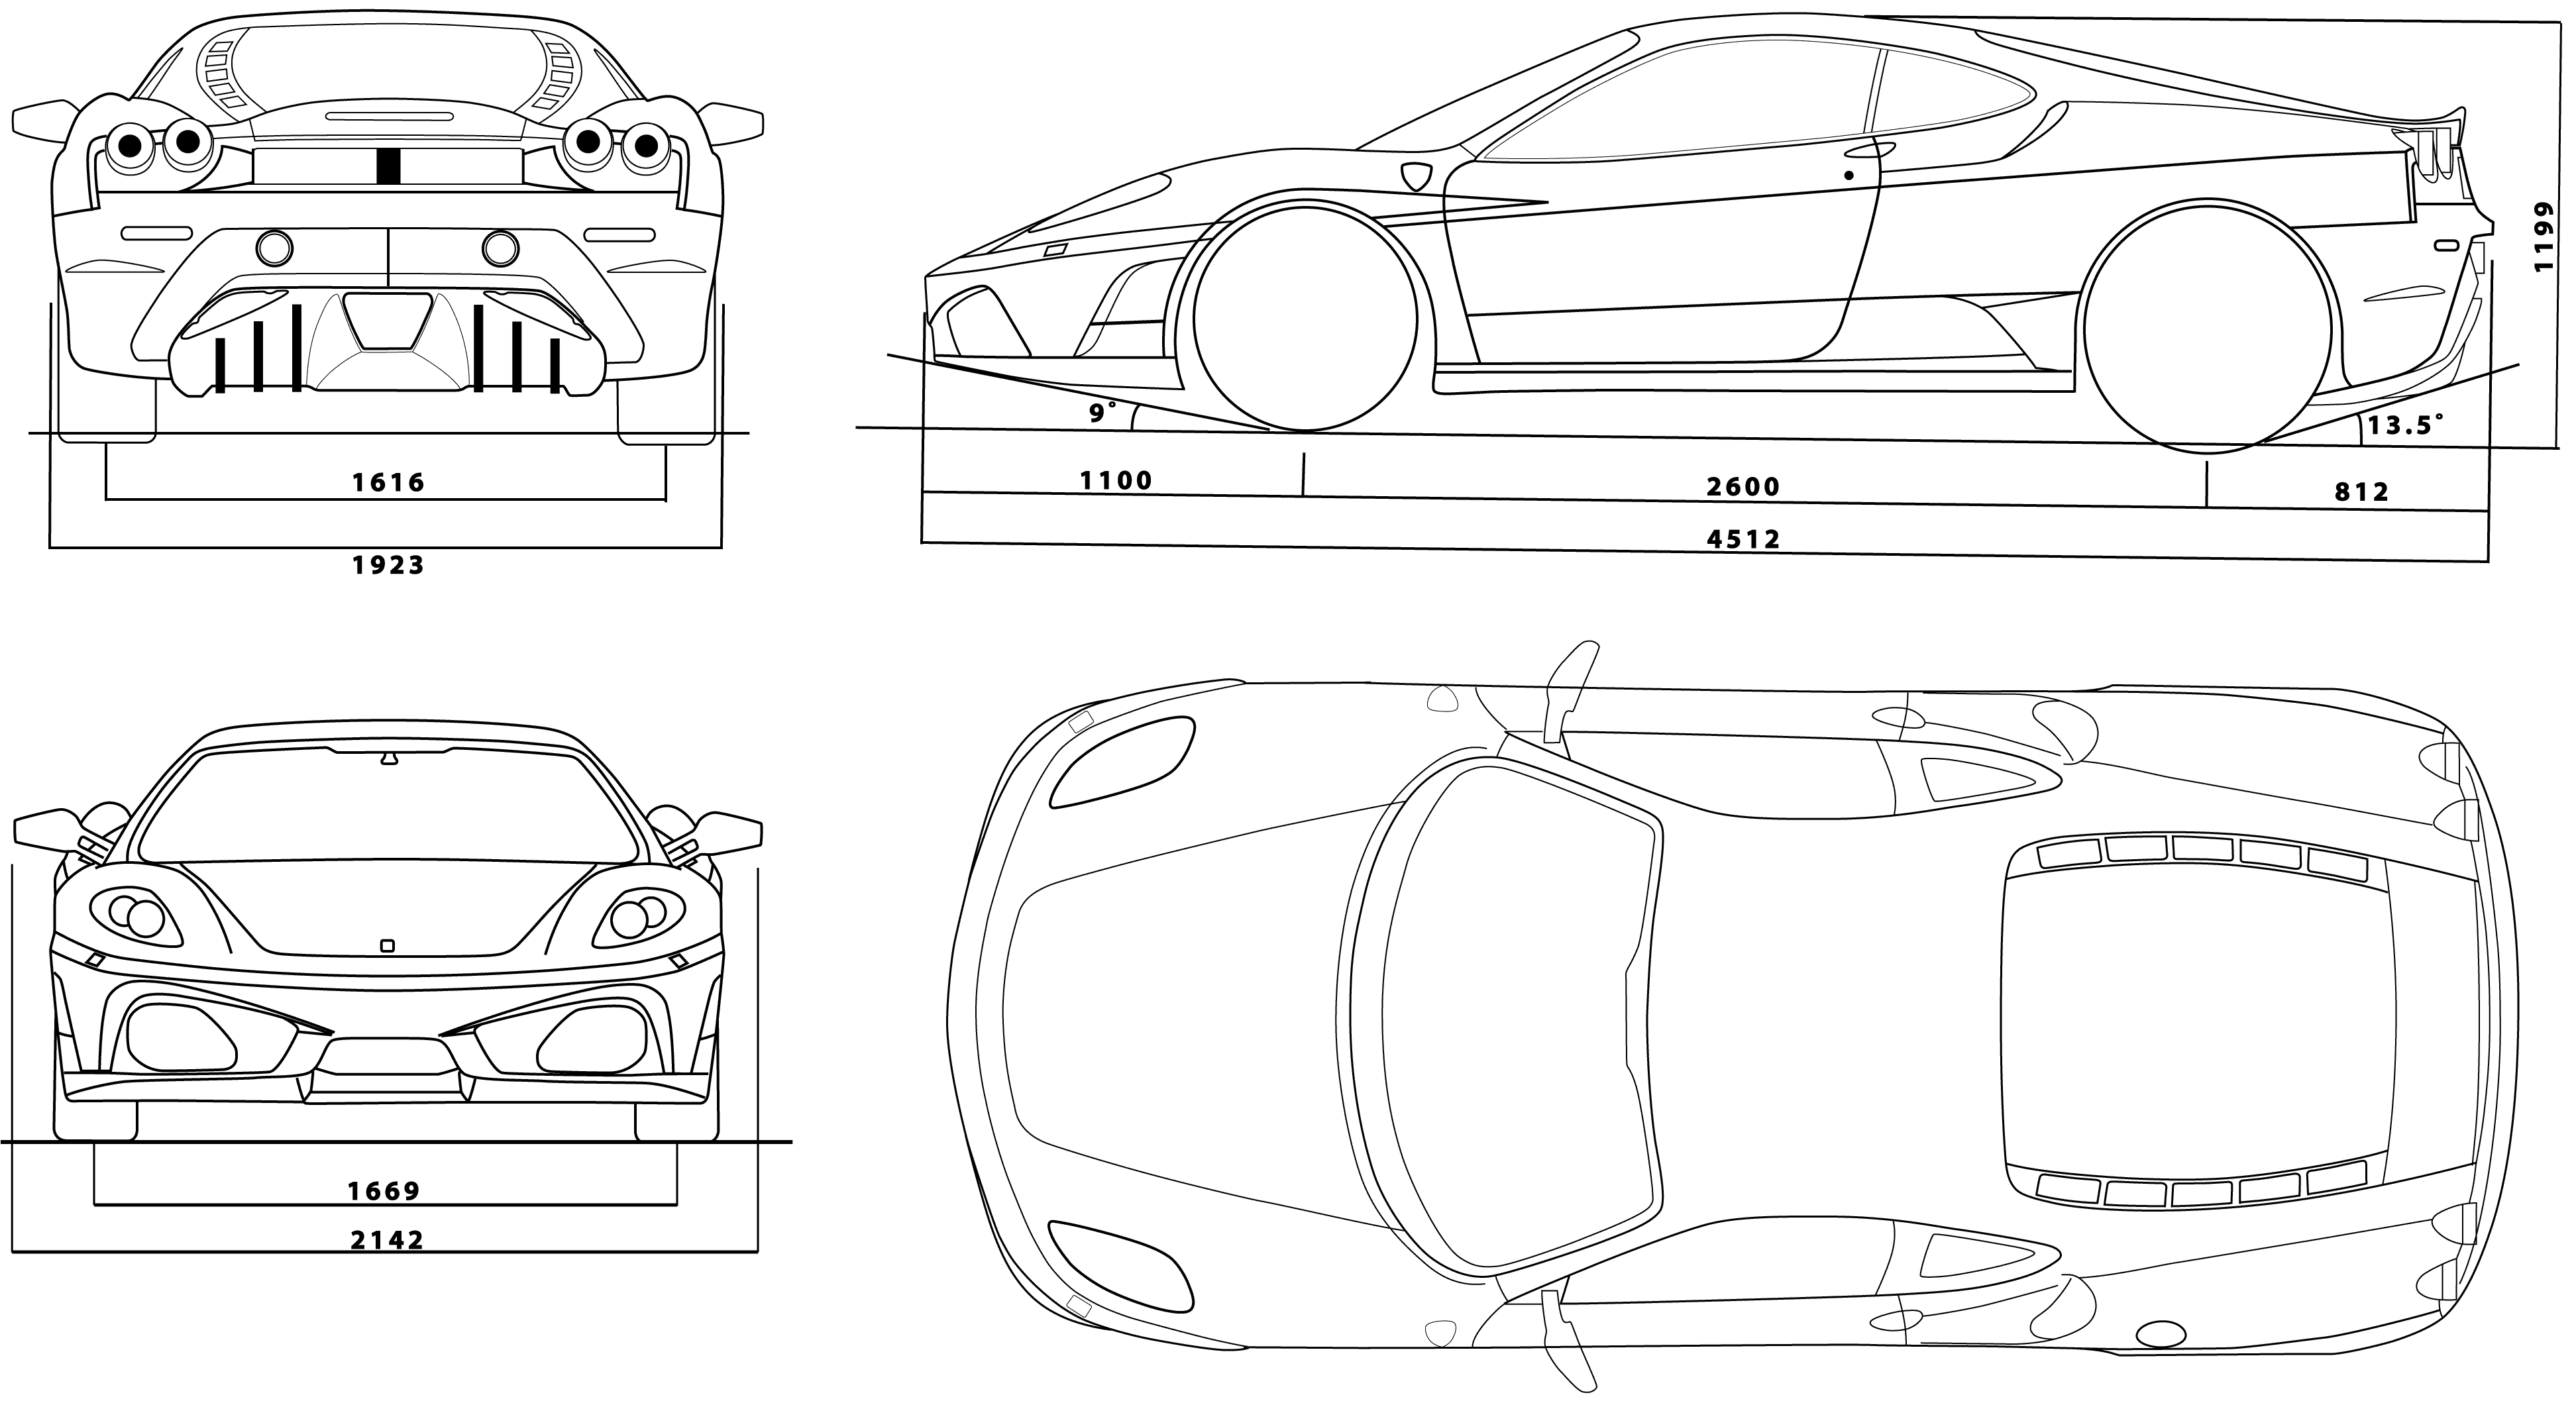 2005 Ferrari F430 Coupe blueprints free - Outlines